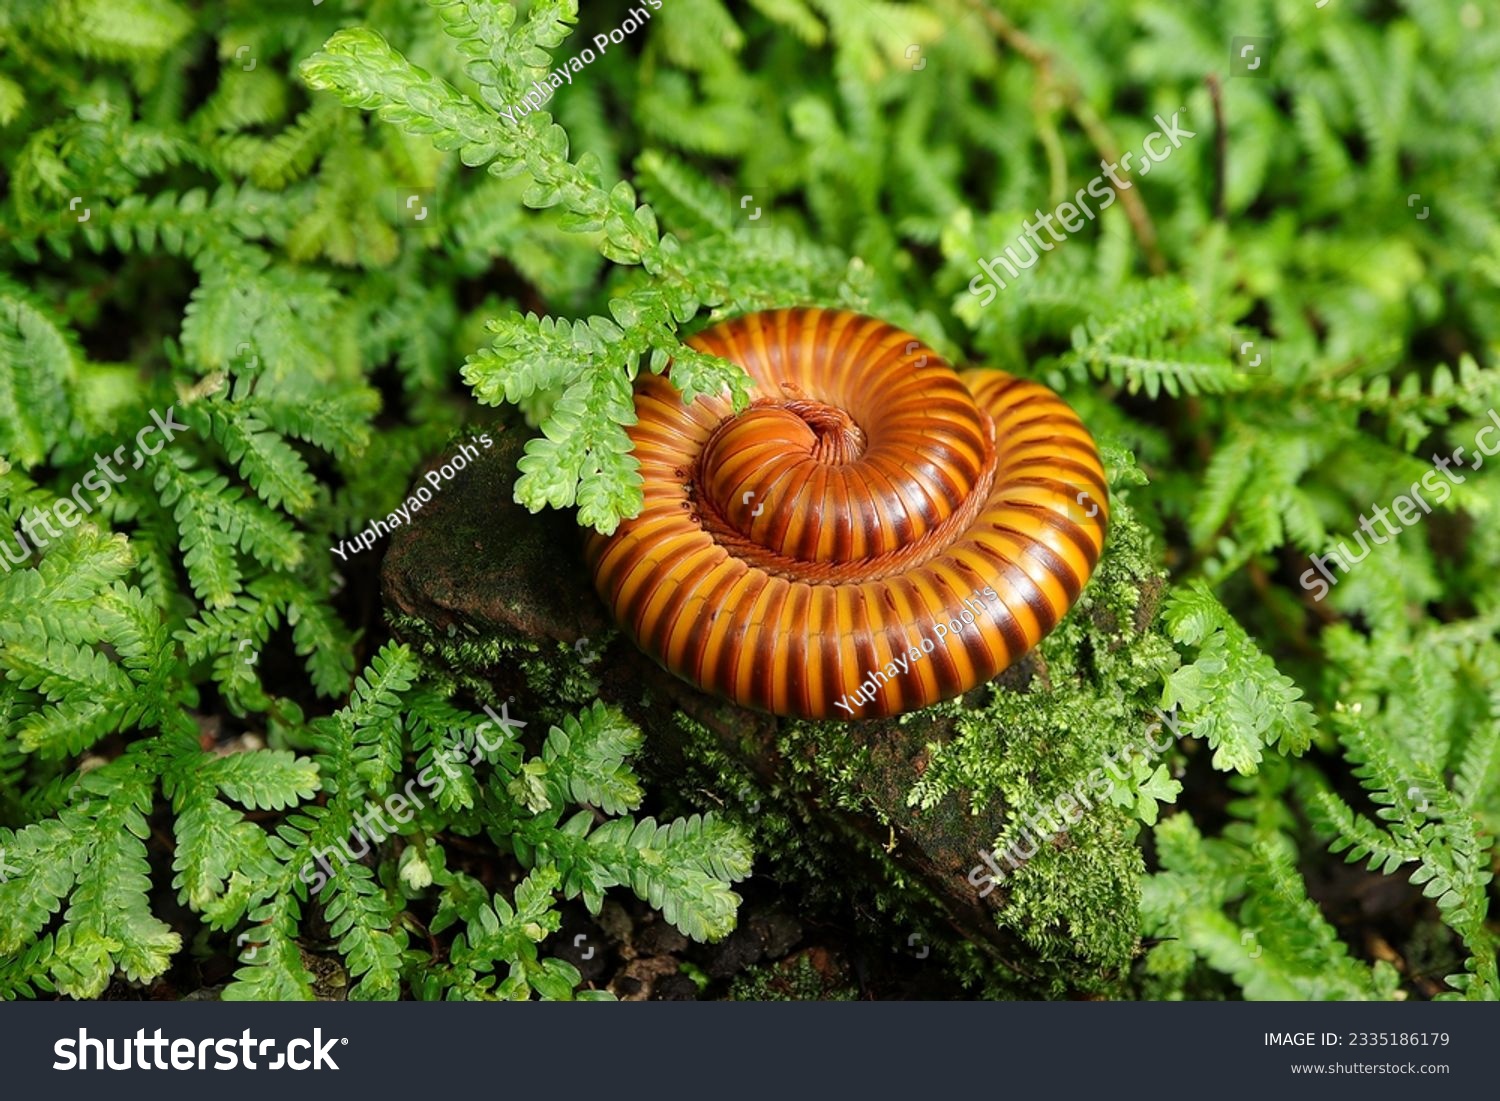 Close up Giant millipedes, "Harpagophoridae" millipede curled up on mossy rocks. Orange millipede, Trigoniulus corallinus on the ground. #2335186179